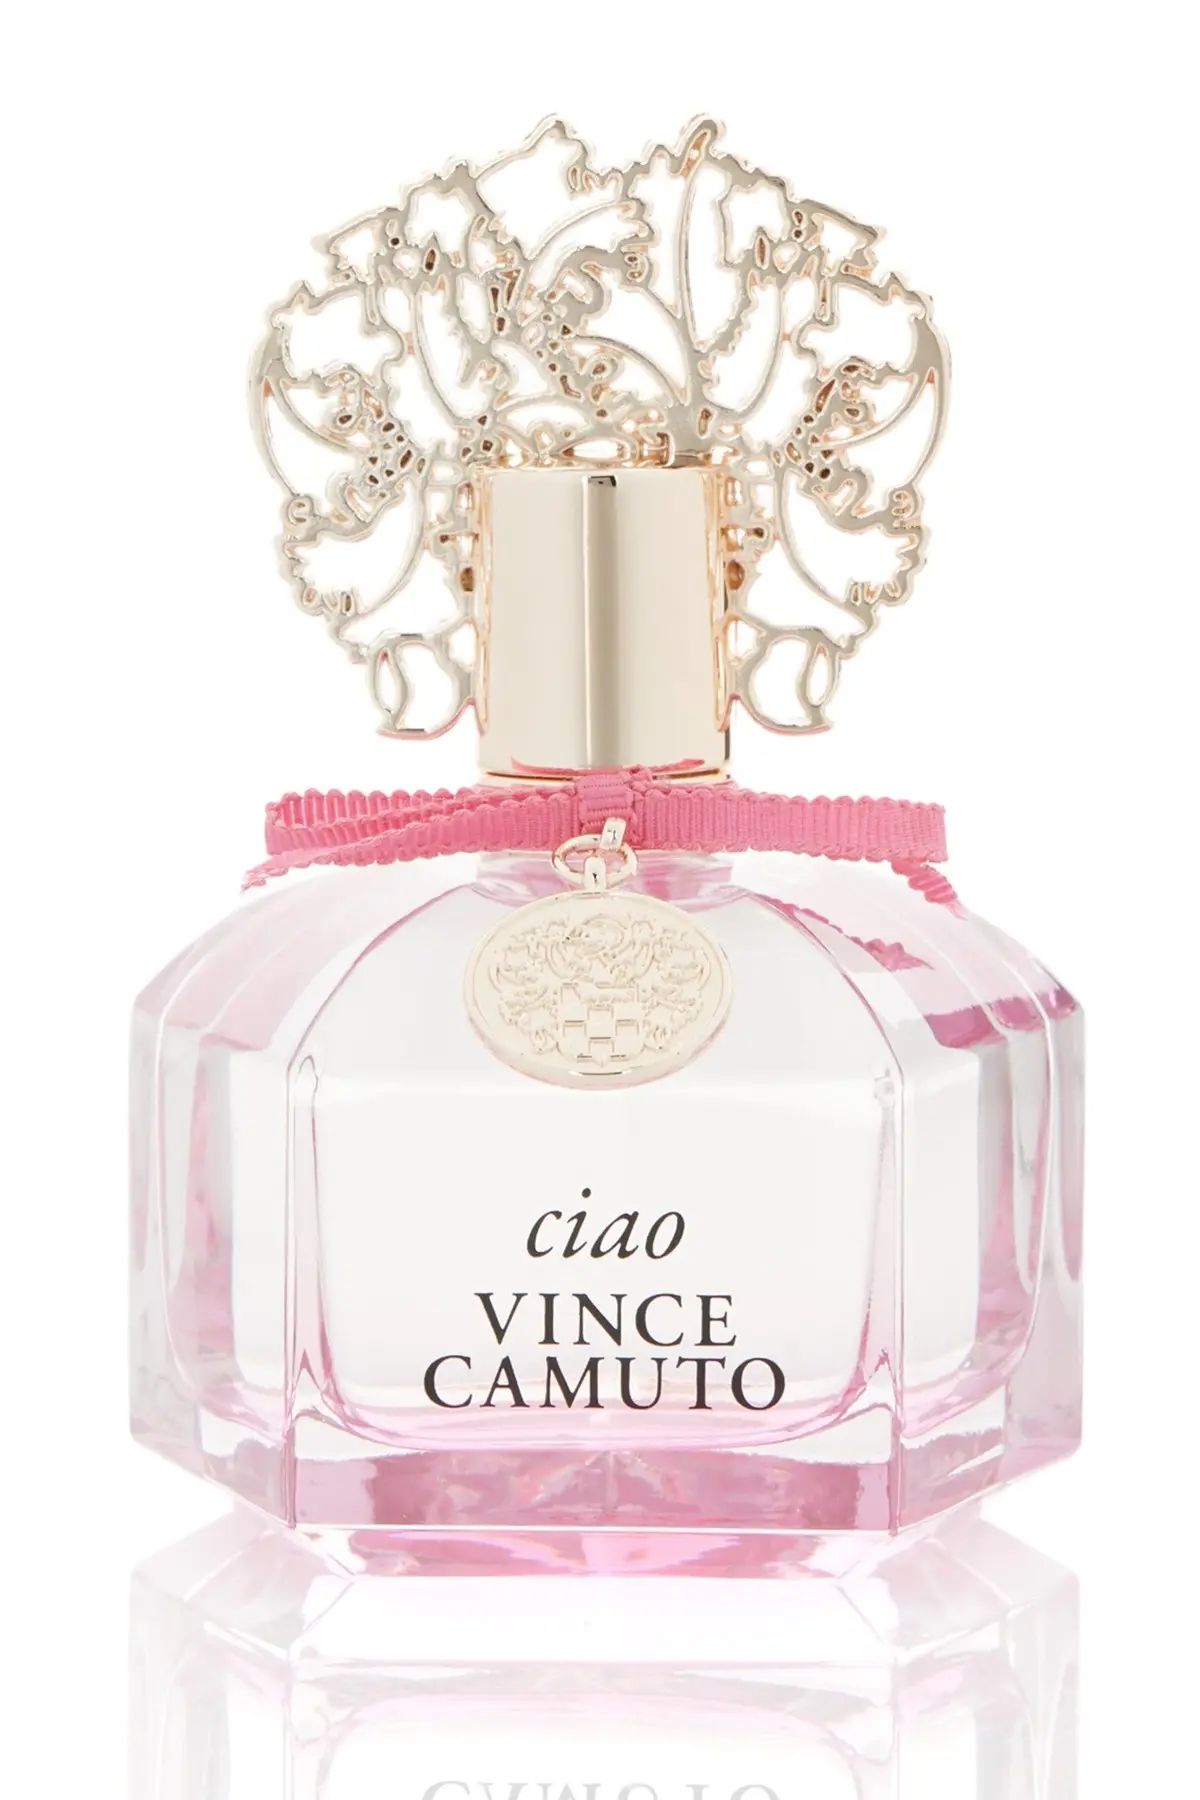 Vince Camuto Ciao Eau de Parfum - 3.4 fl. oz. at Nordstrom Rack | Nordstrom Rack